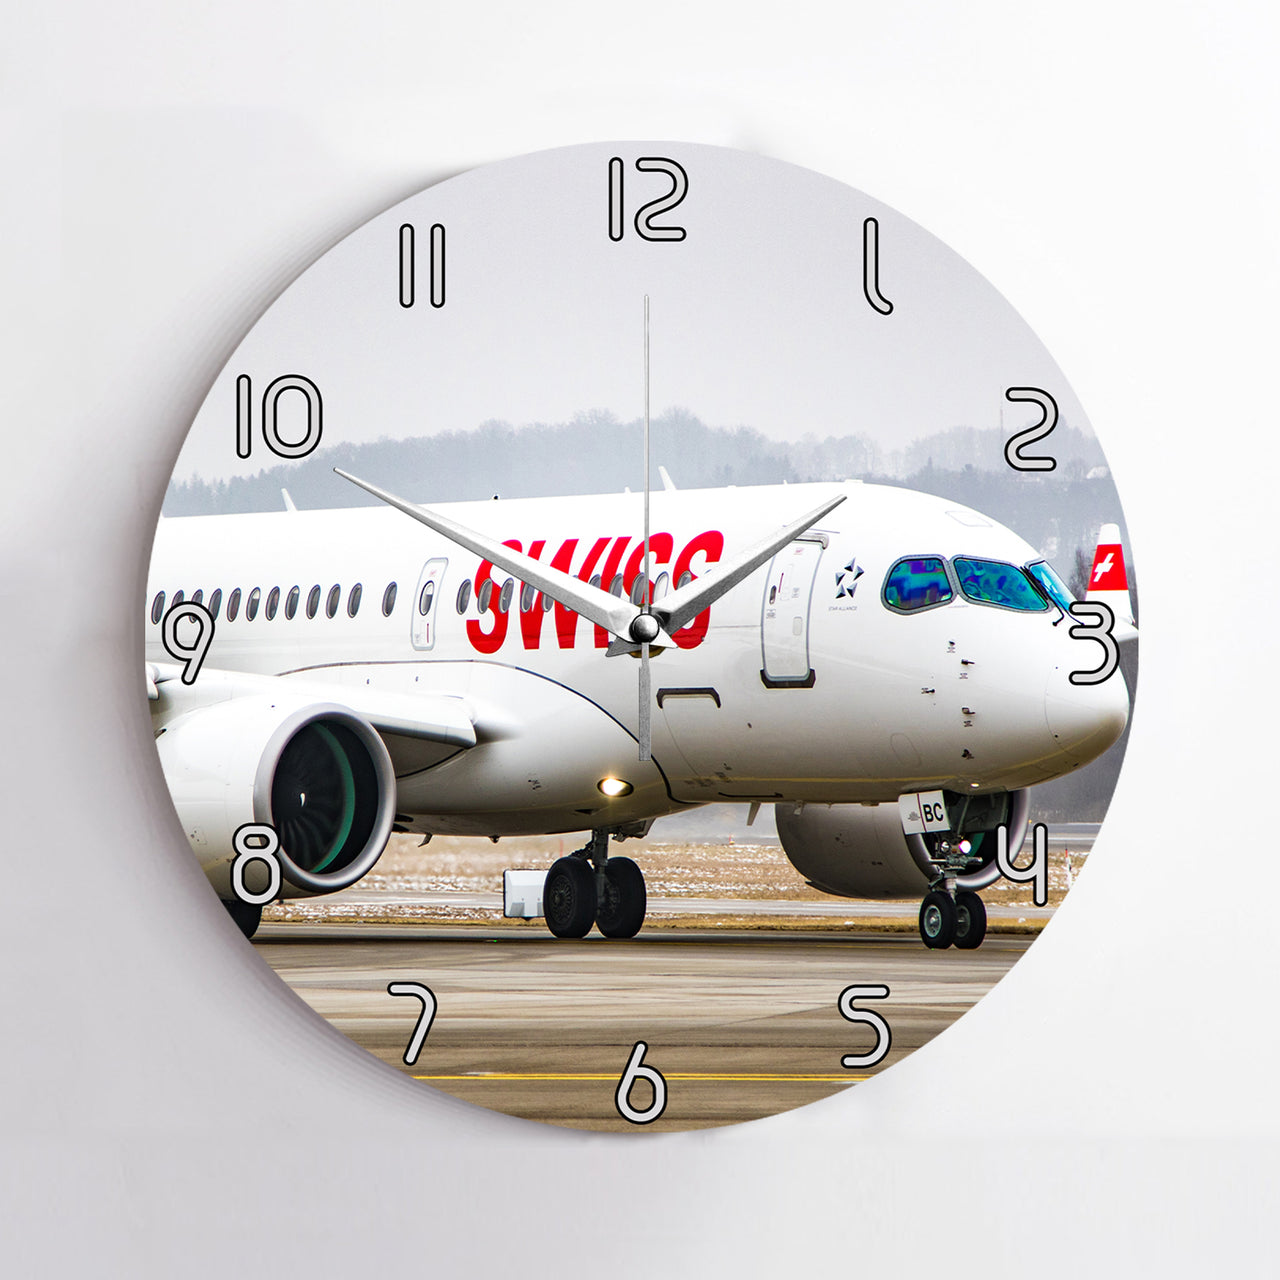 Swiss Airlines Bombardier CS100 Printed Wall Clocks